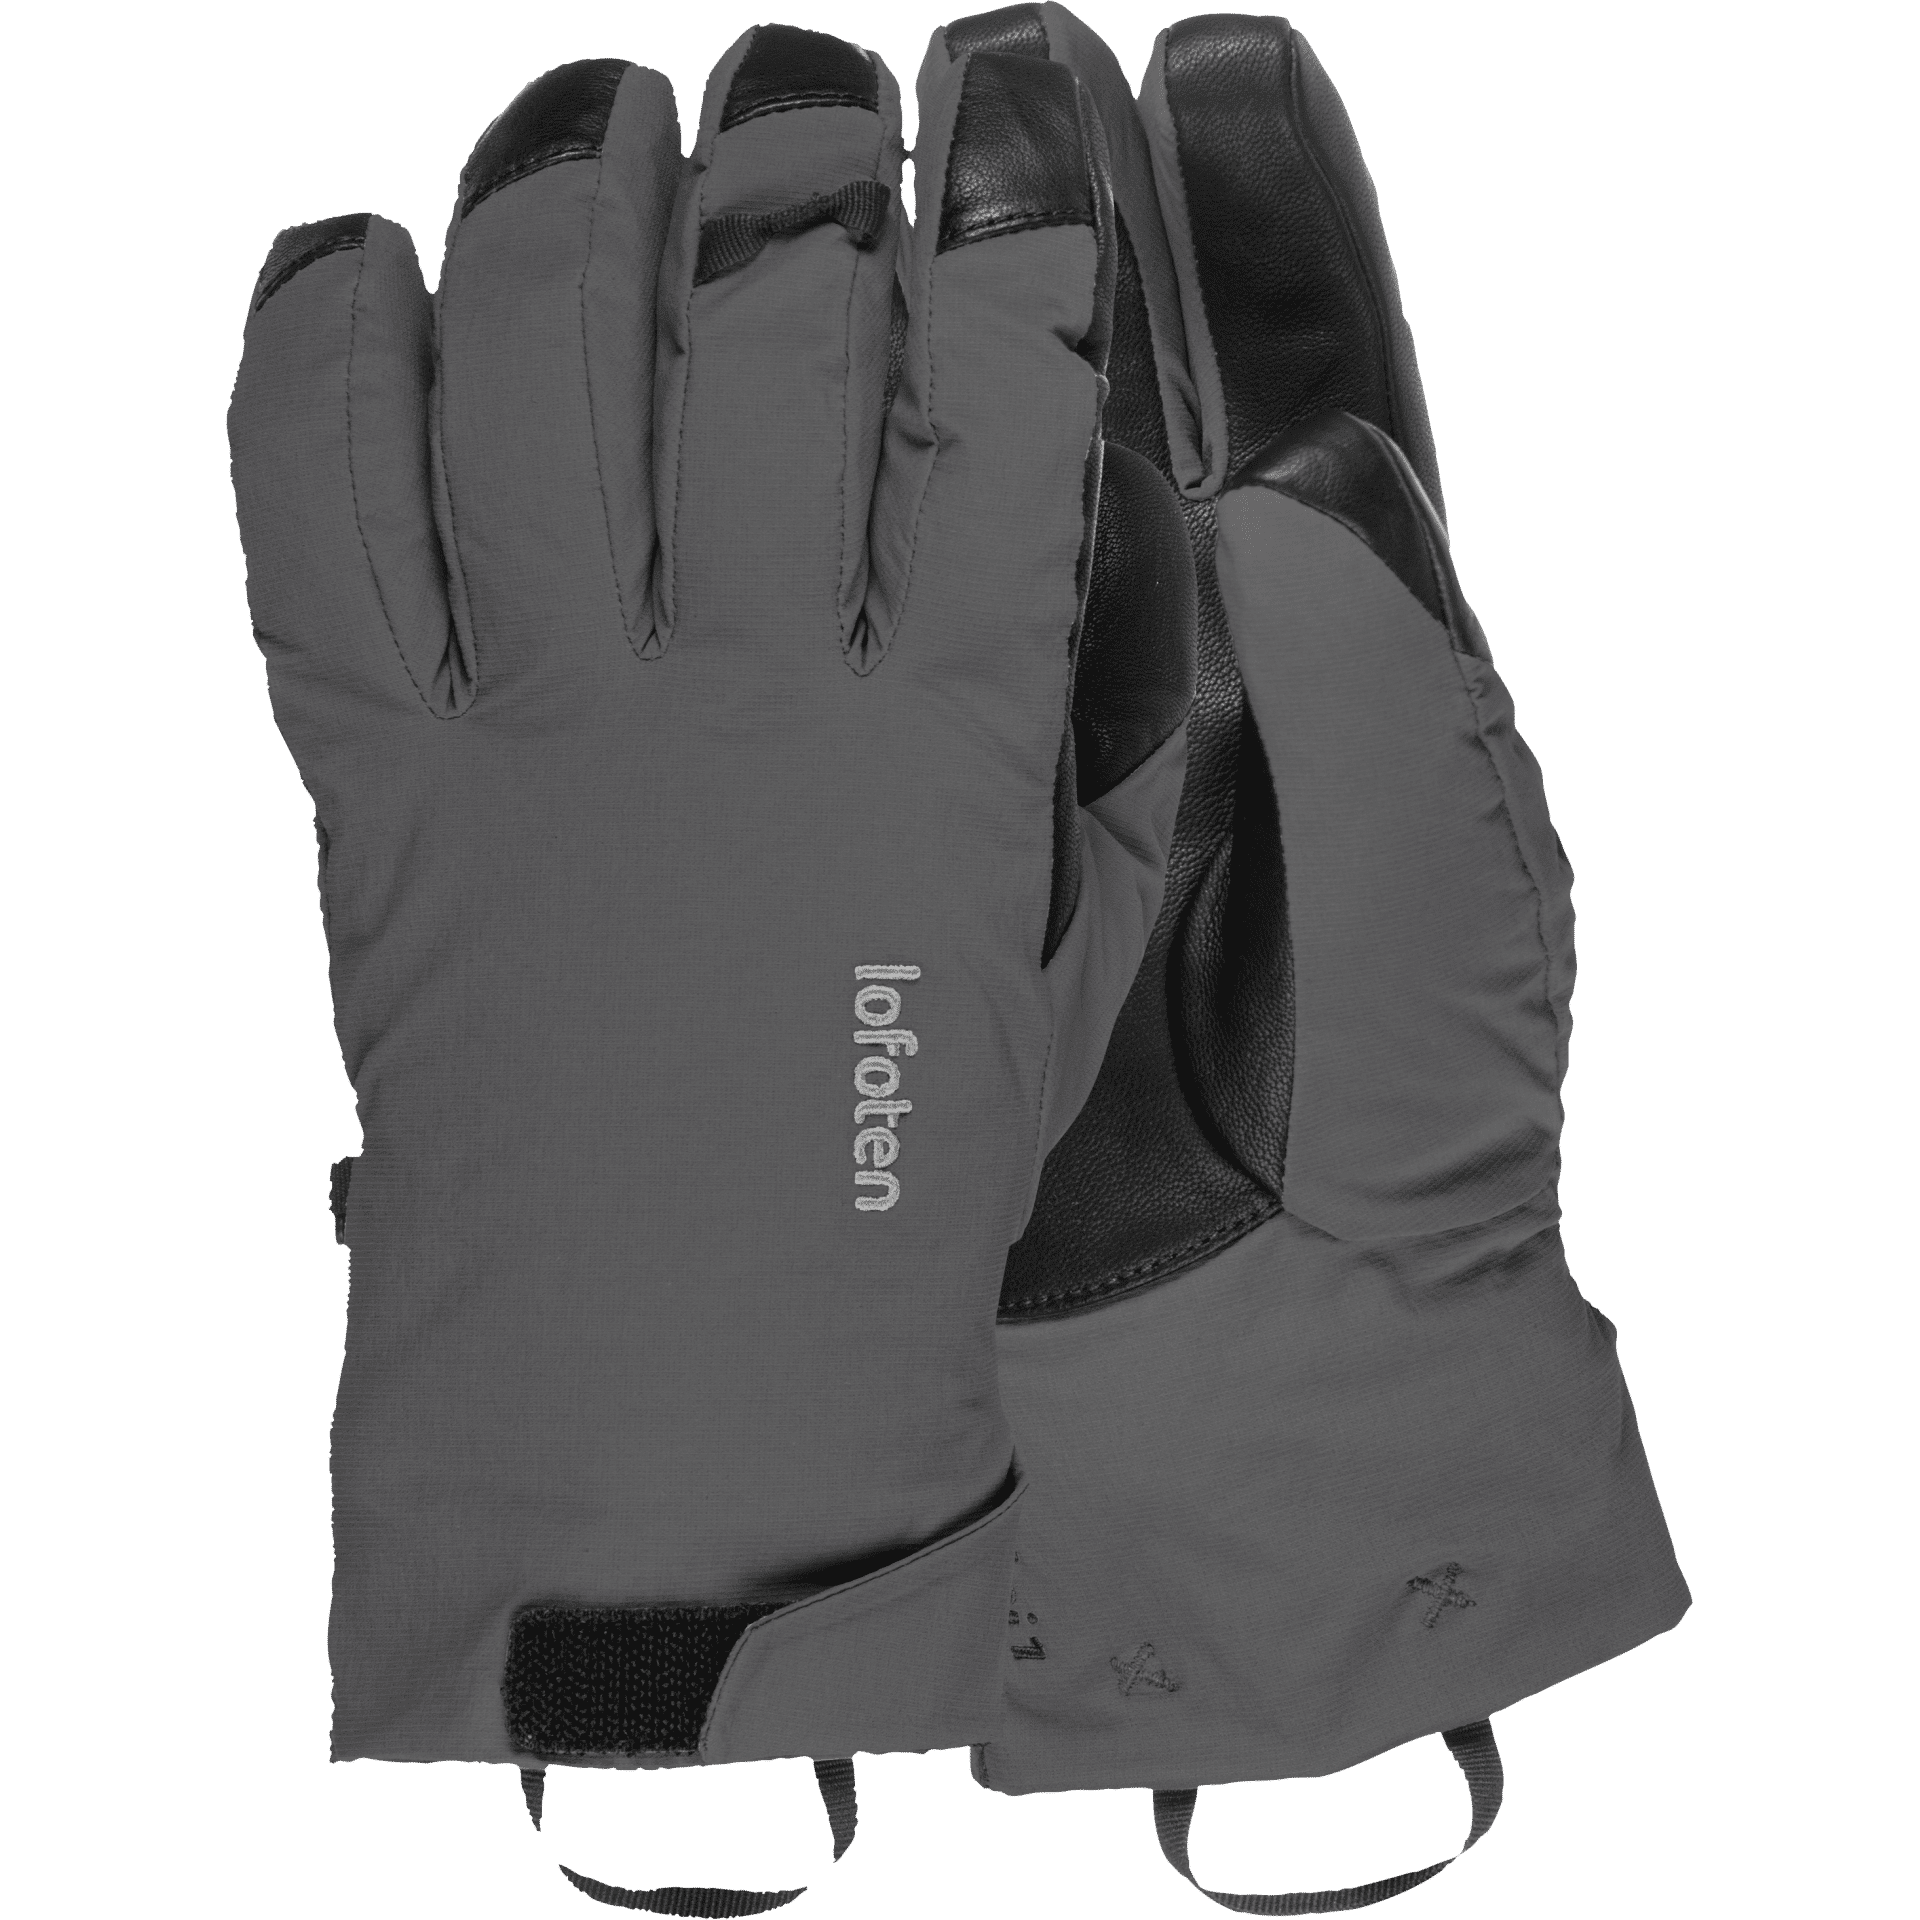 Norrona Lofoten dri1 PrimaLoft170 short Gloves - Hiihtohanskat